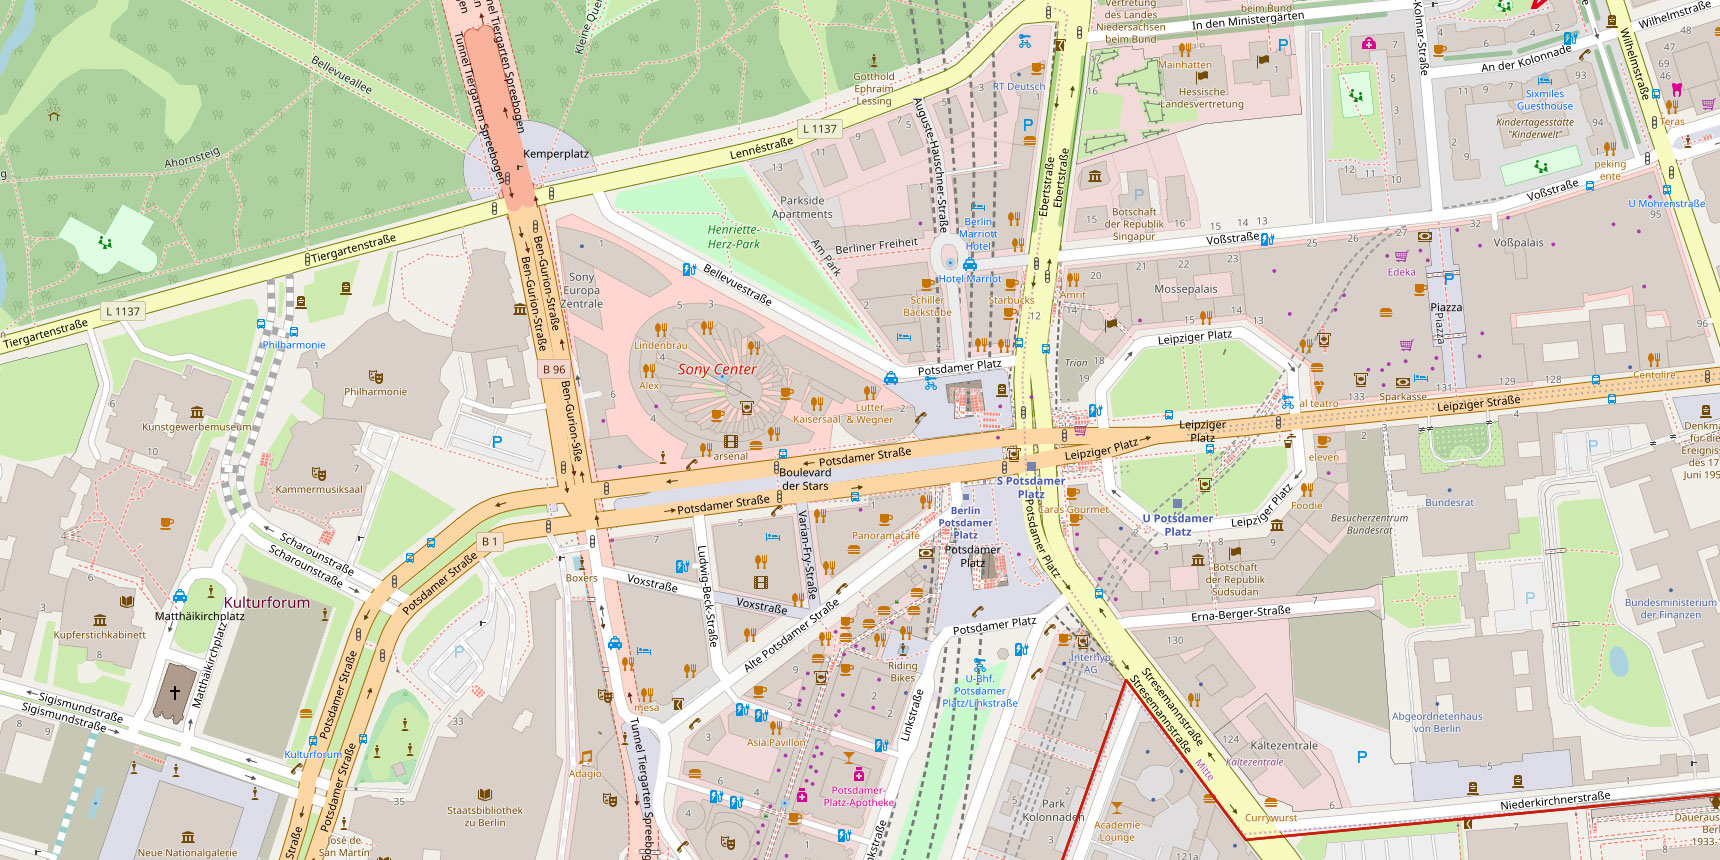 2D view of the Potsdamer Platz in the Berlin Economic Atlas